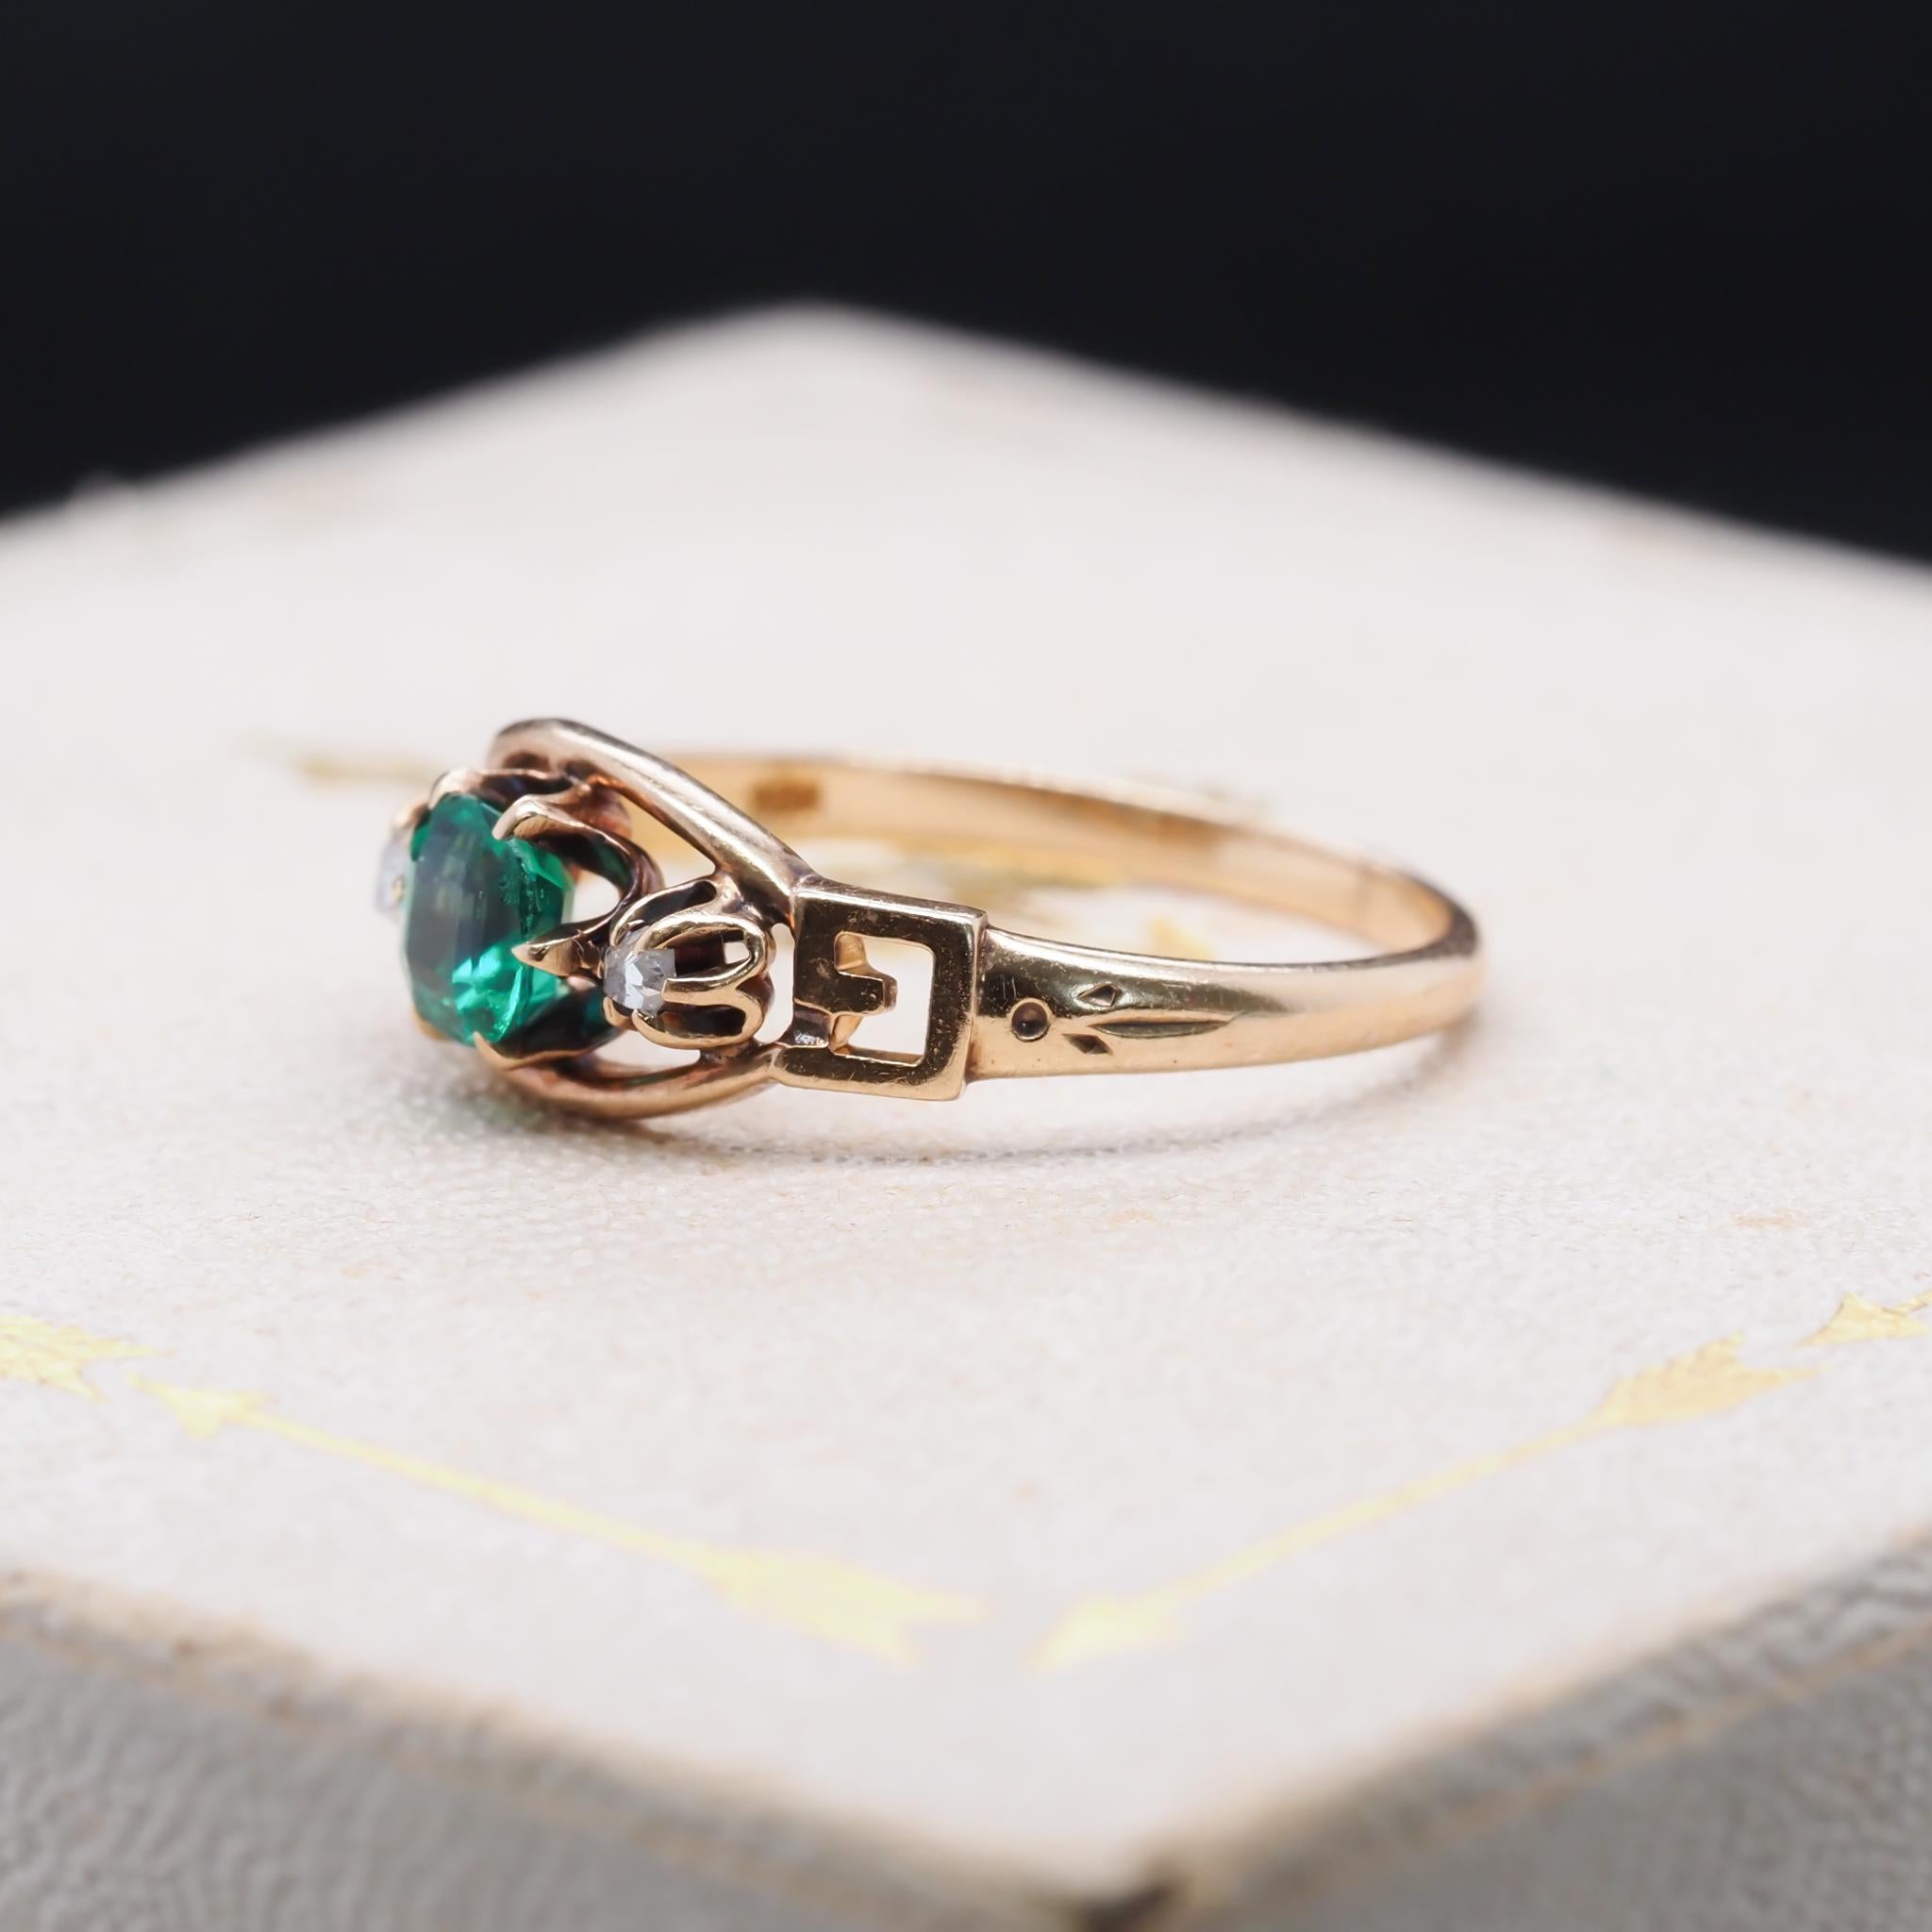 Antique Cushion Cut Circa 1900s Edwardian Emerald and Rose Cut Diamond Engagement Ring